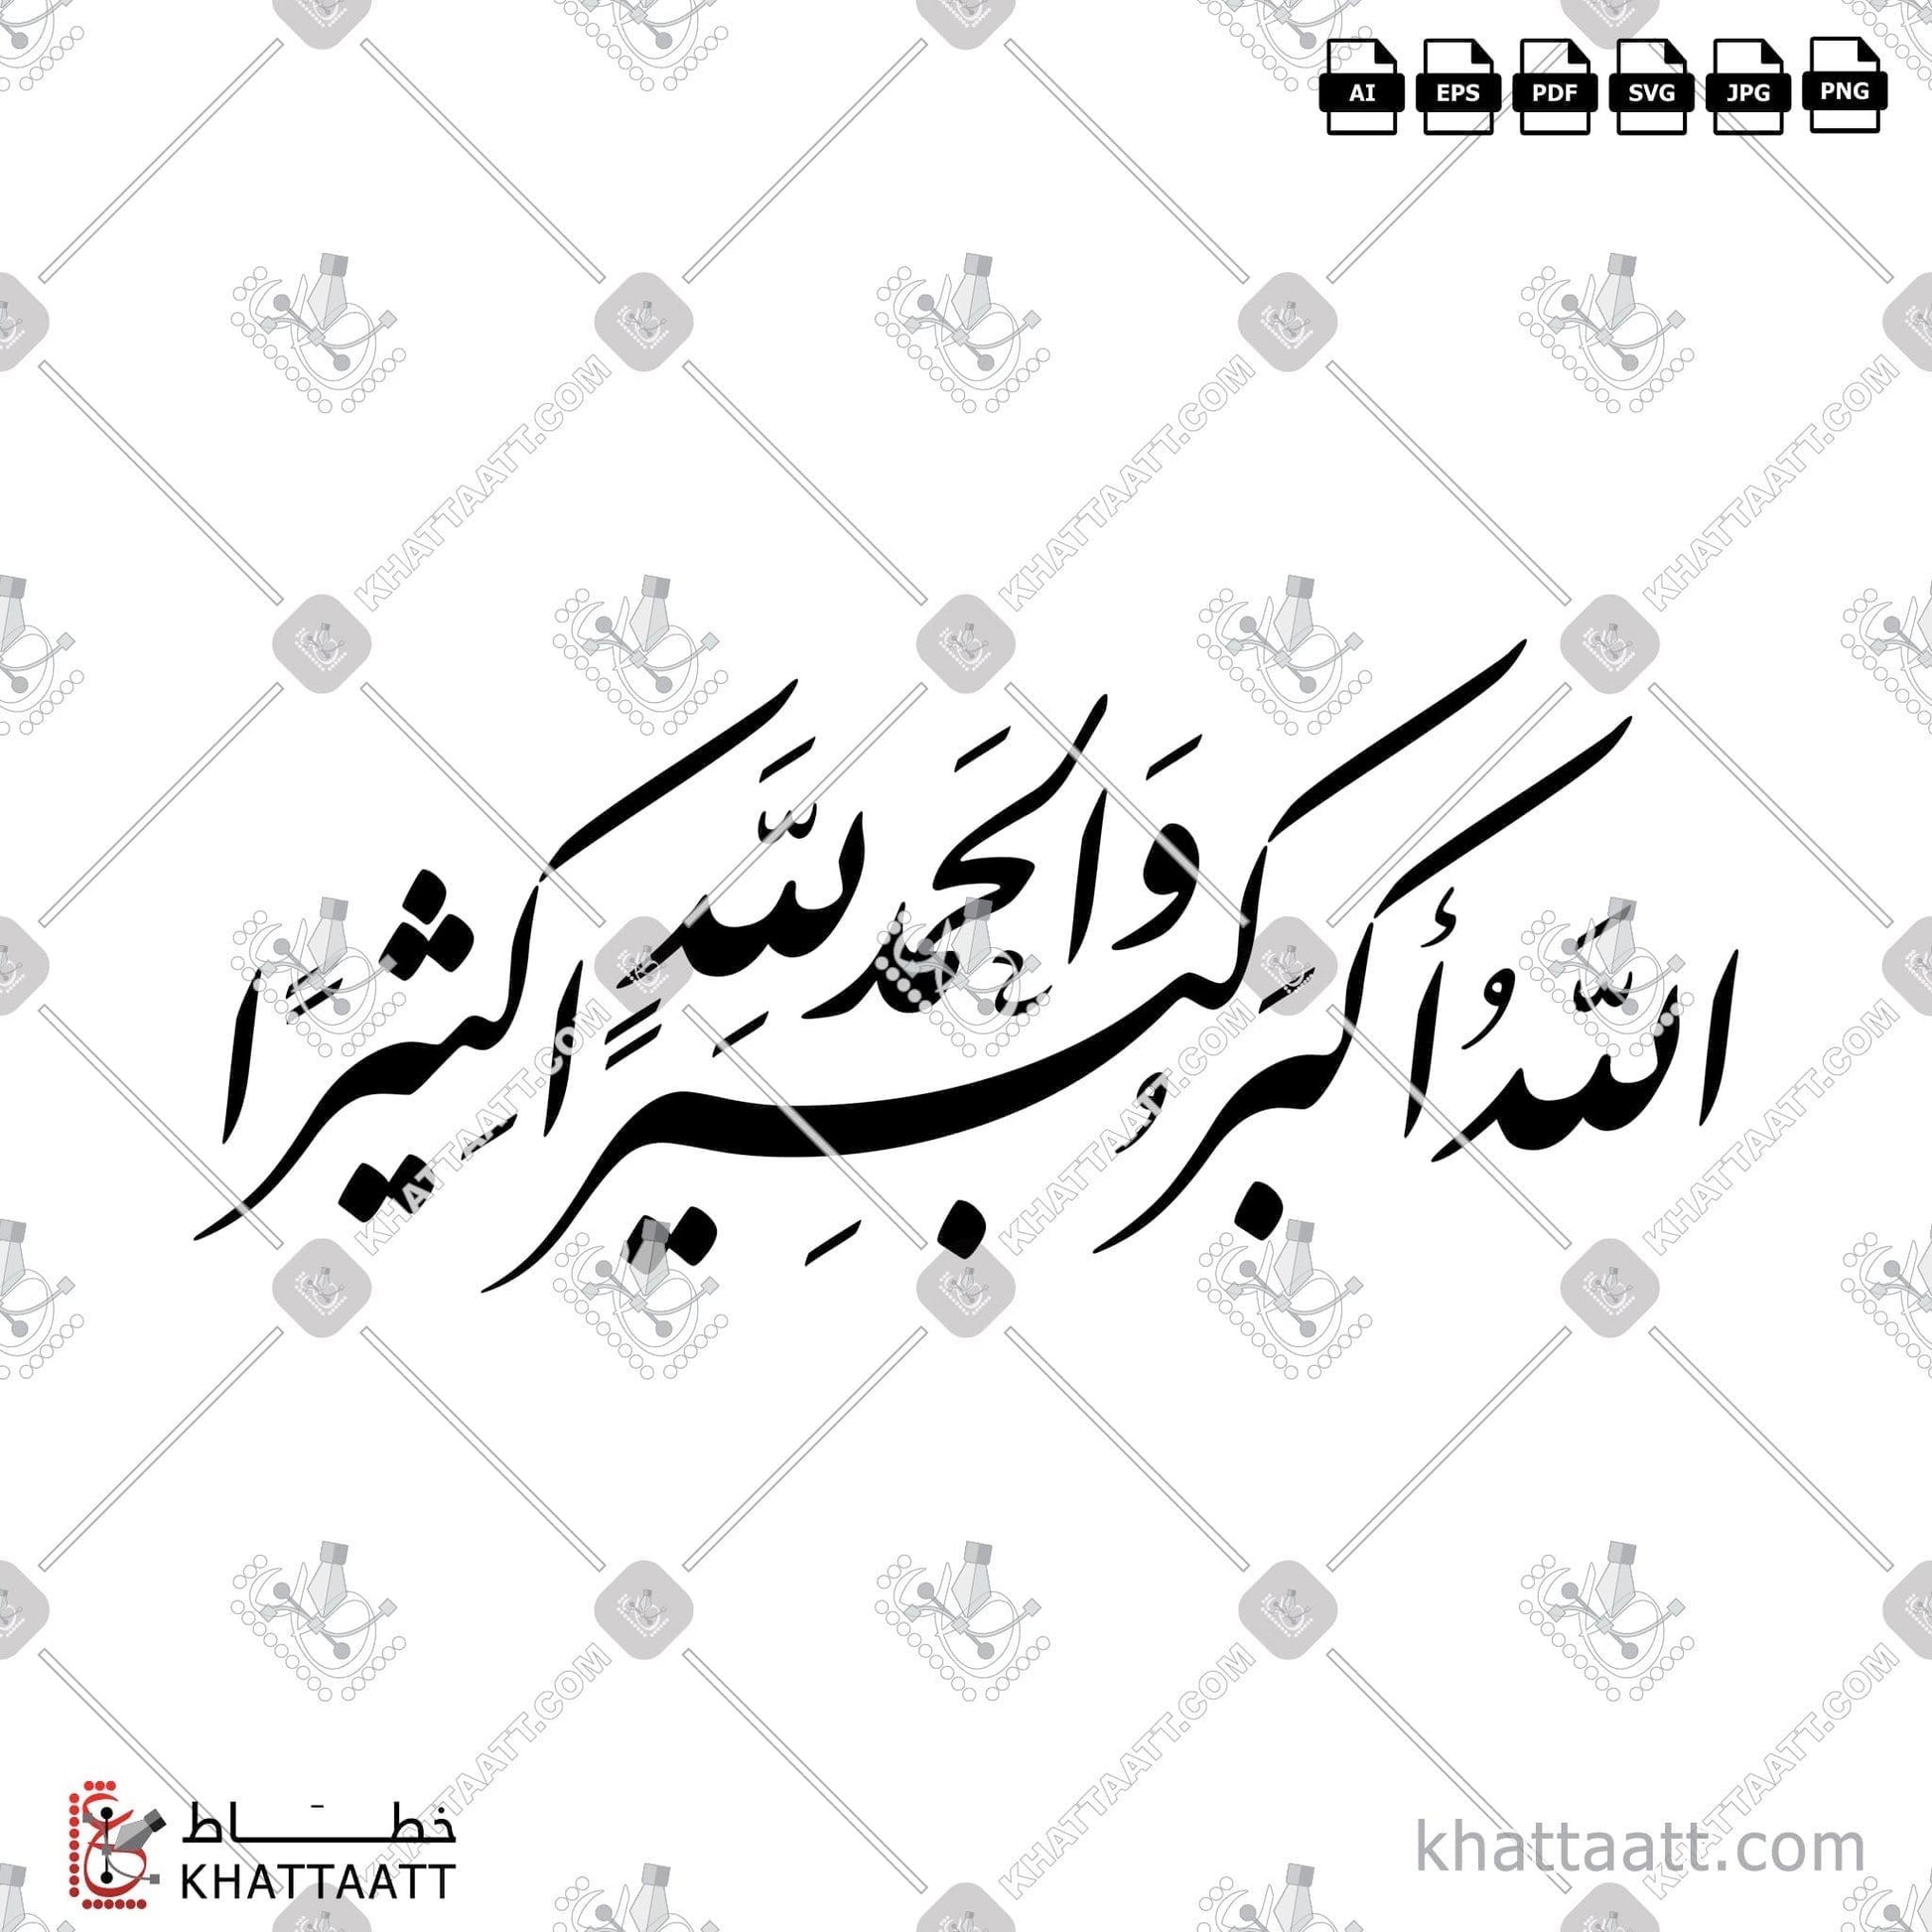 Download Arabic Calligraphy of الله أكبر كبيرًا والحمد لله كثيرًا in Farsi - الخط الفارسي in vector and .png